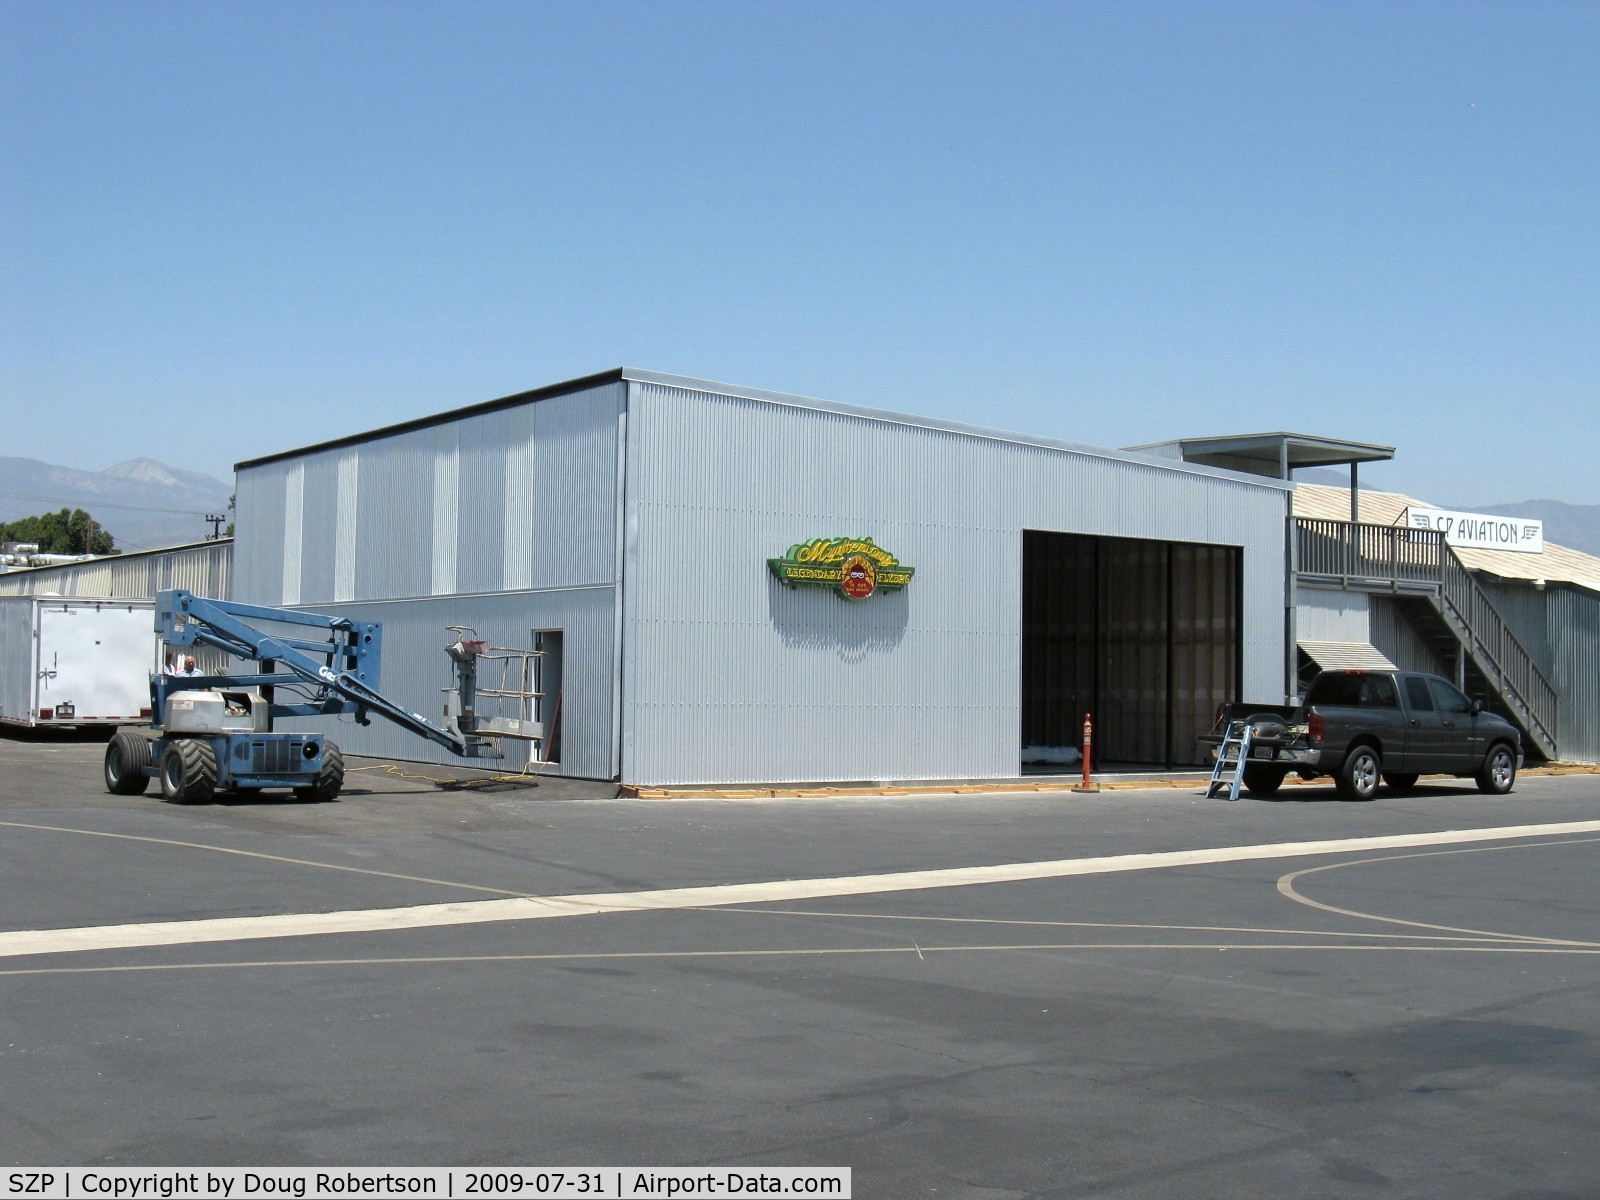 Santa Paula Airport (SZP) - New Hangar Under Construction. Bi-Fold hangar door installed.